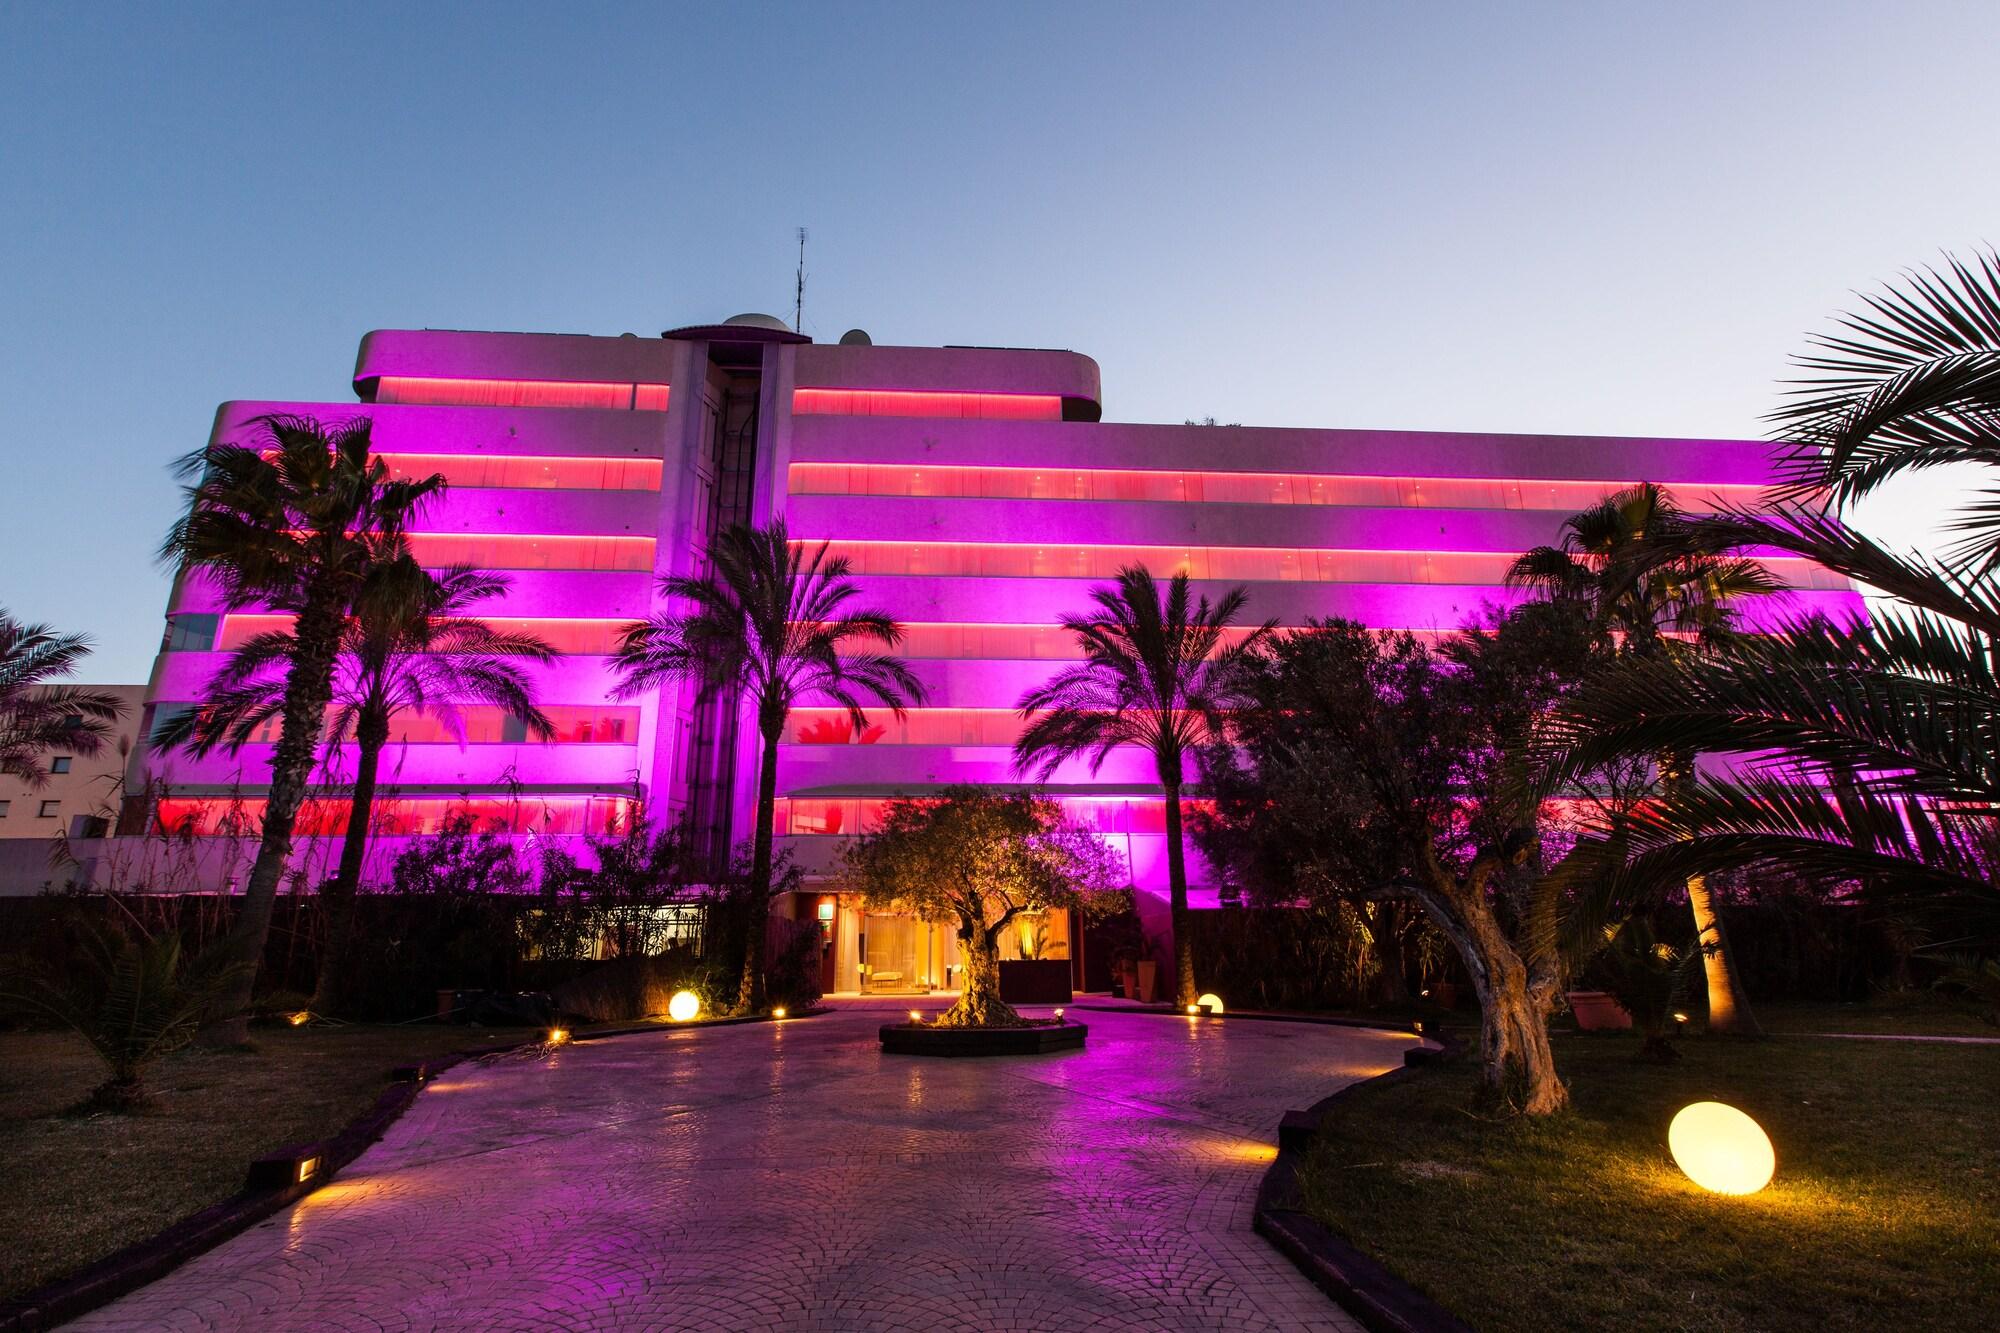 El Hotel Pacha – Includes entrance to Pacha Club